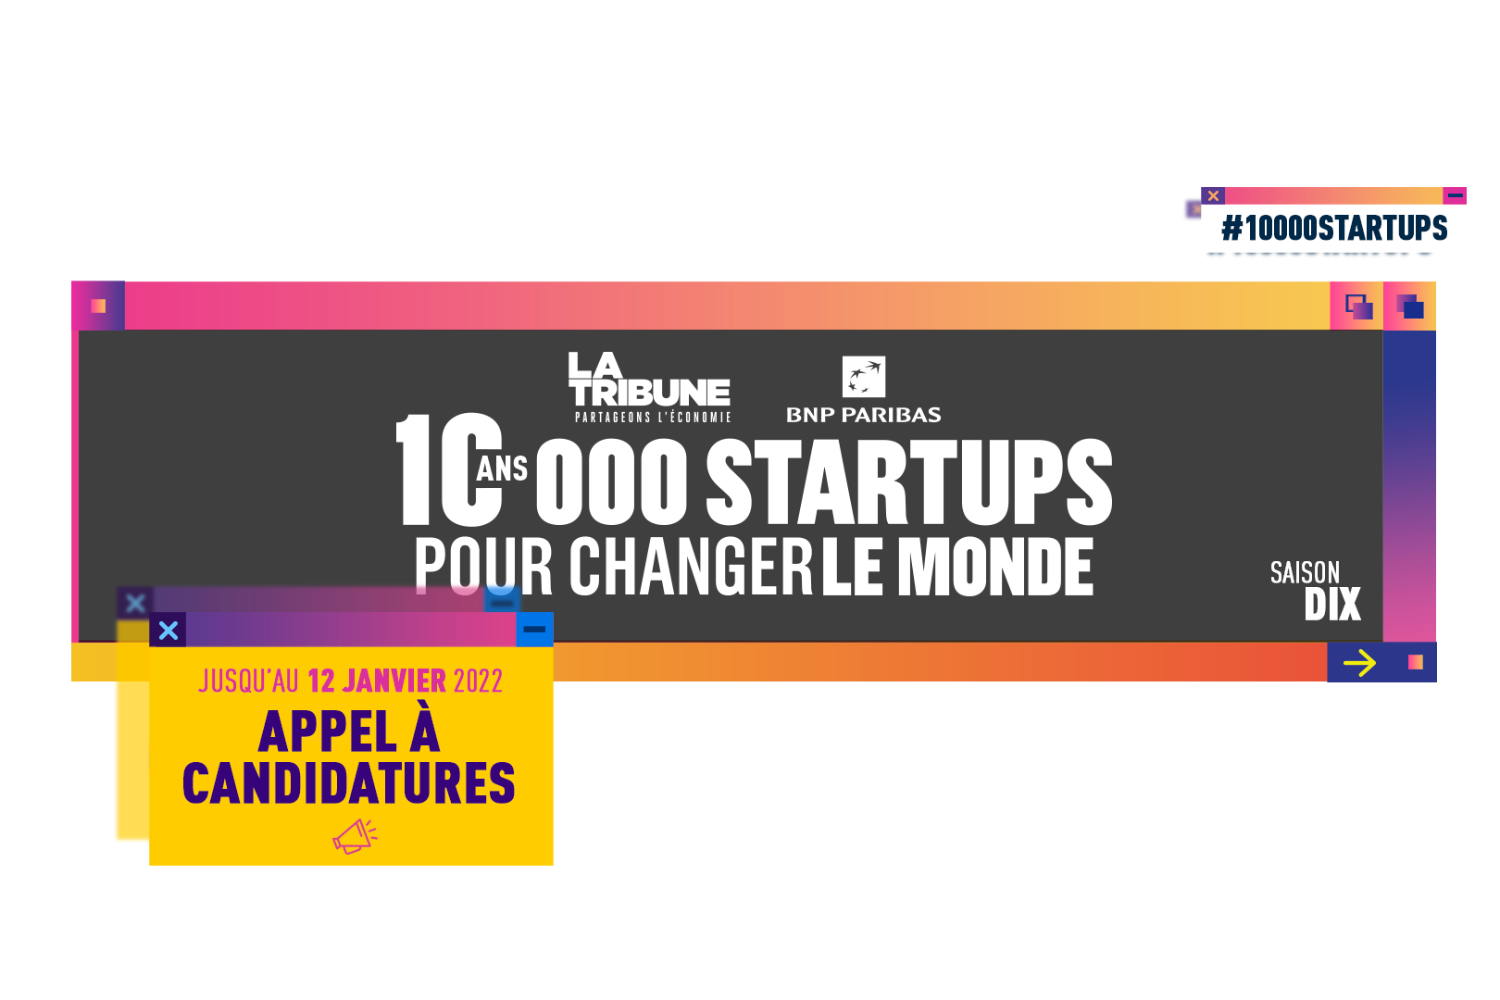 La Tribune - 10'000 startups para mudar o mundo 